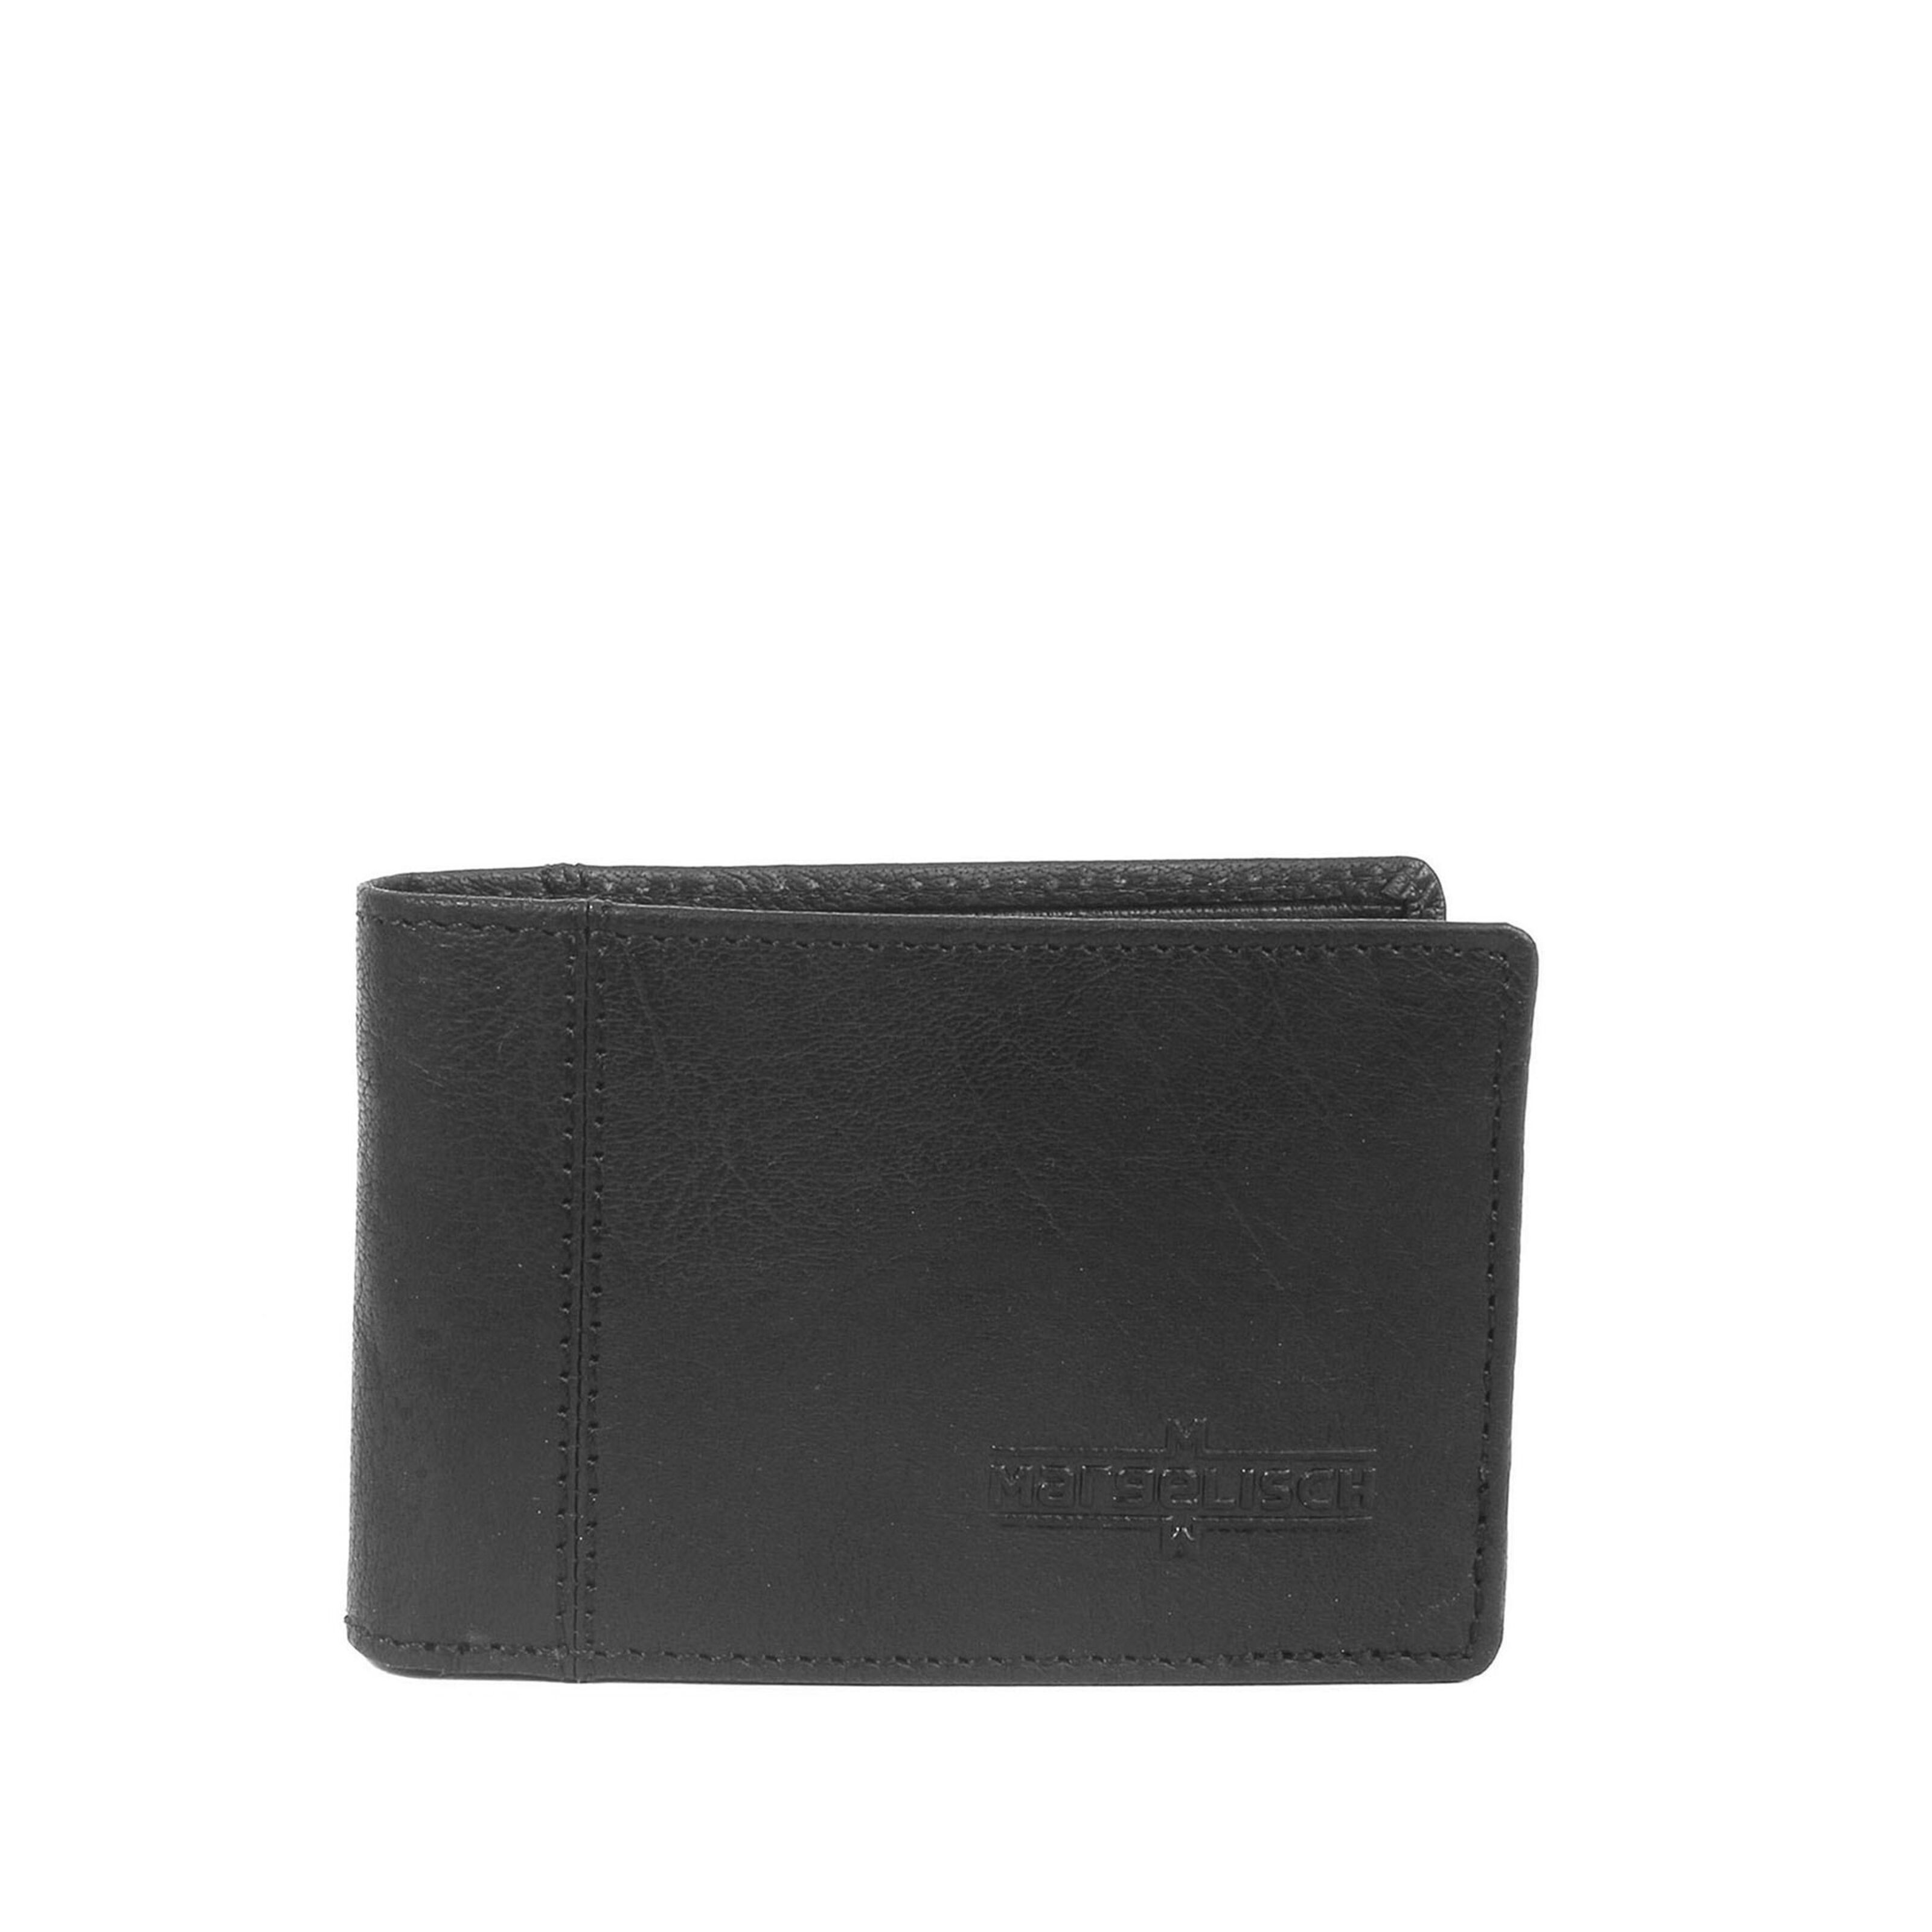 Marcello black RFID Buy 2 mini wholesale wallet